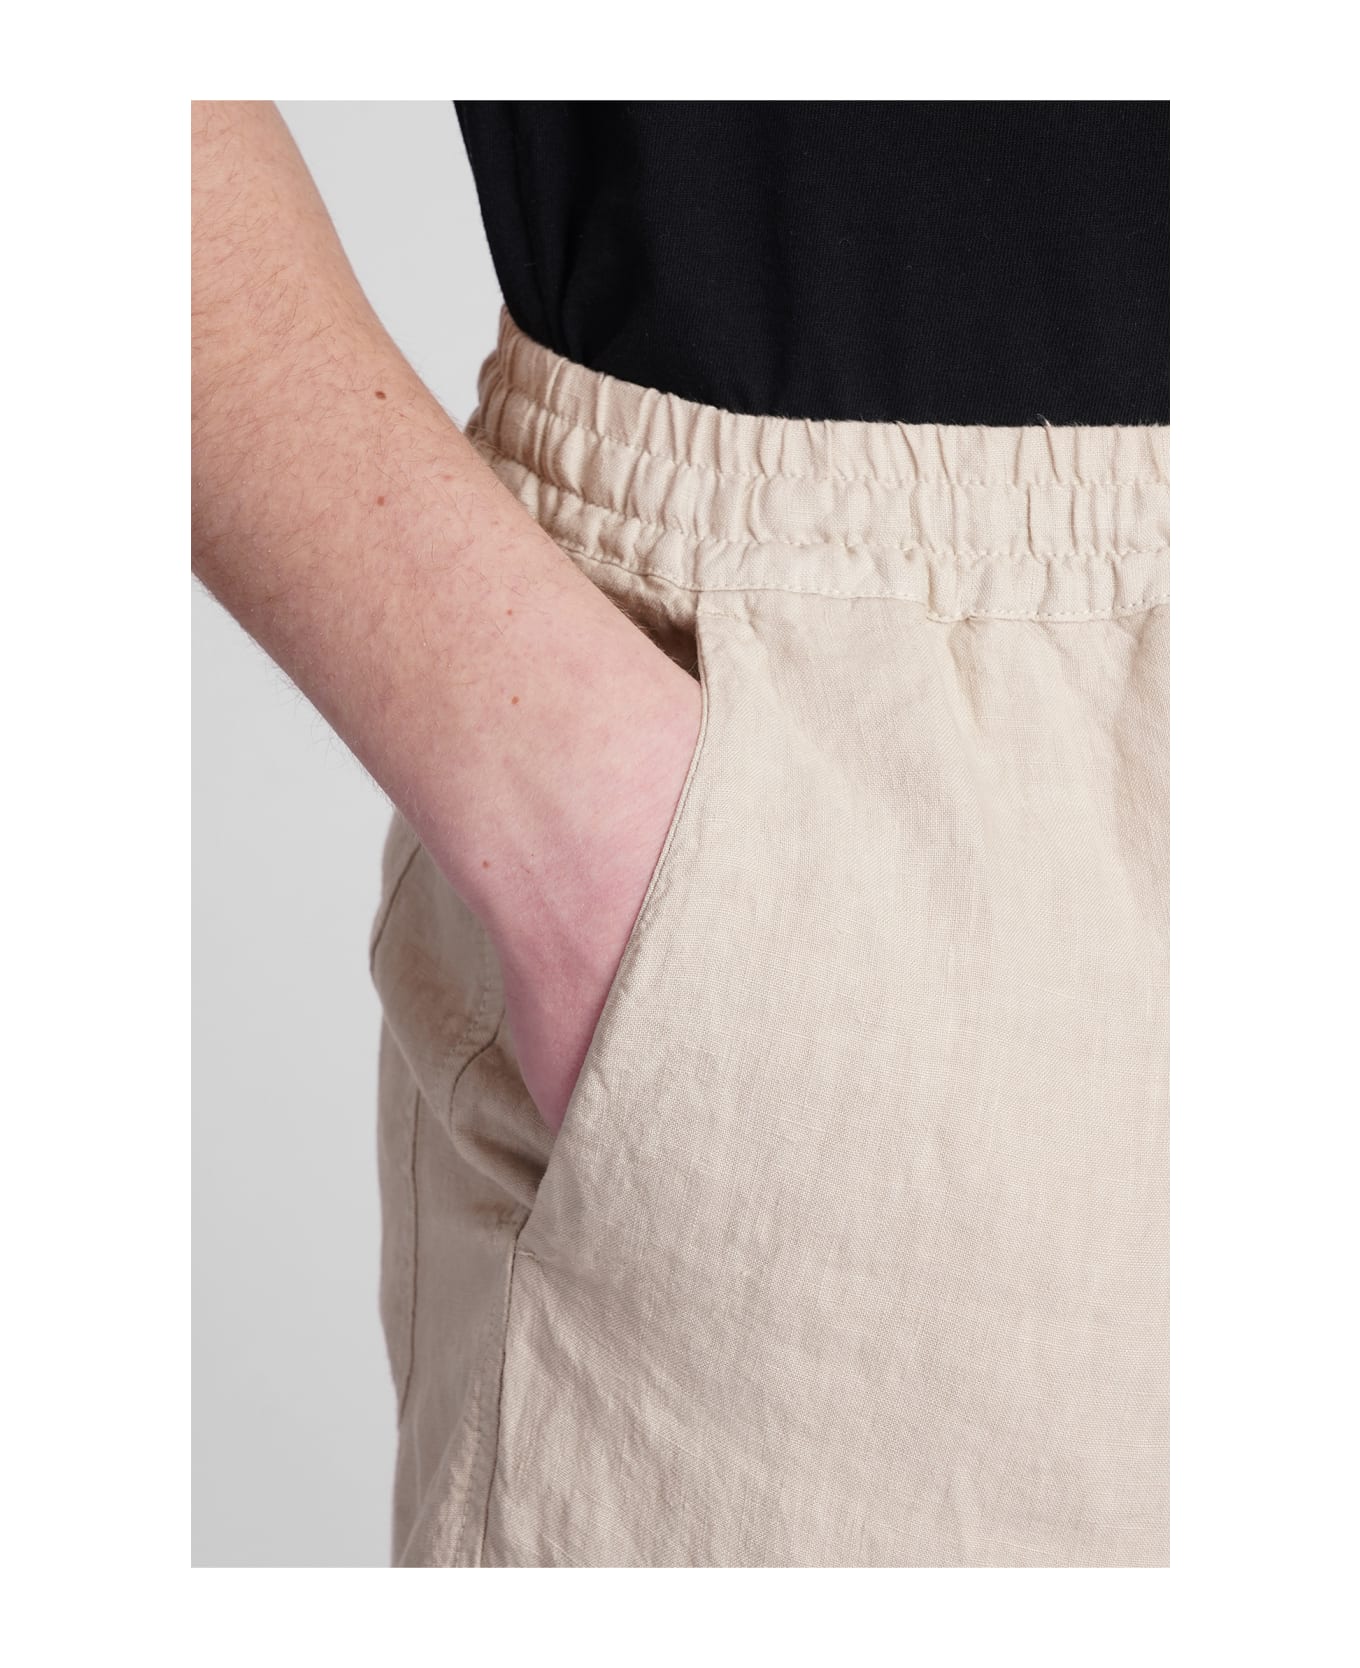 120% Lino Shorts In Beige Linen - Nut ショートパンツ